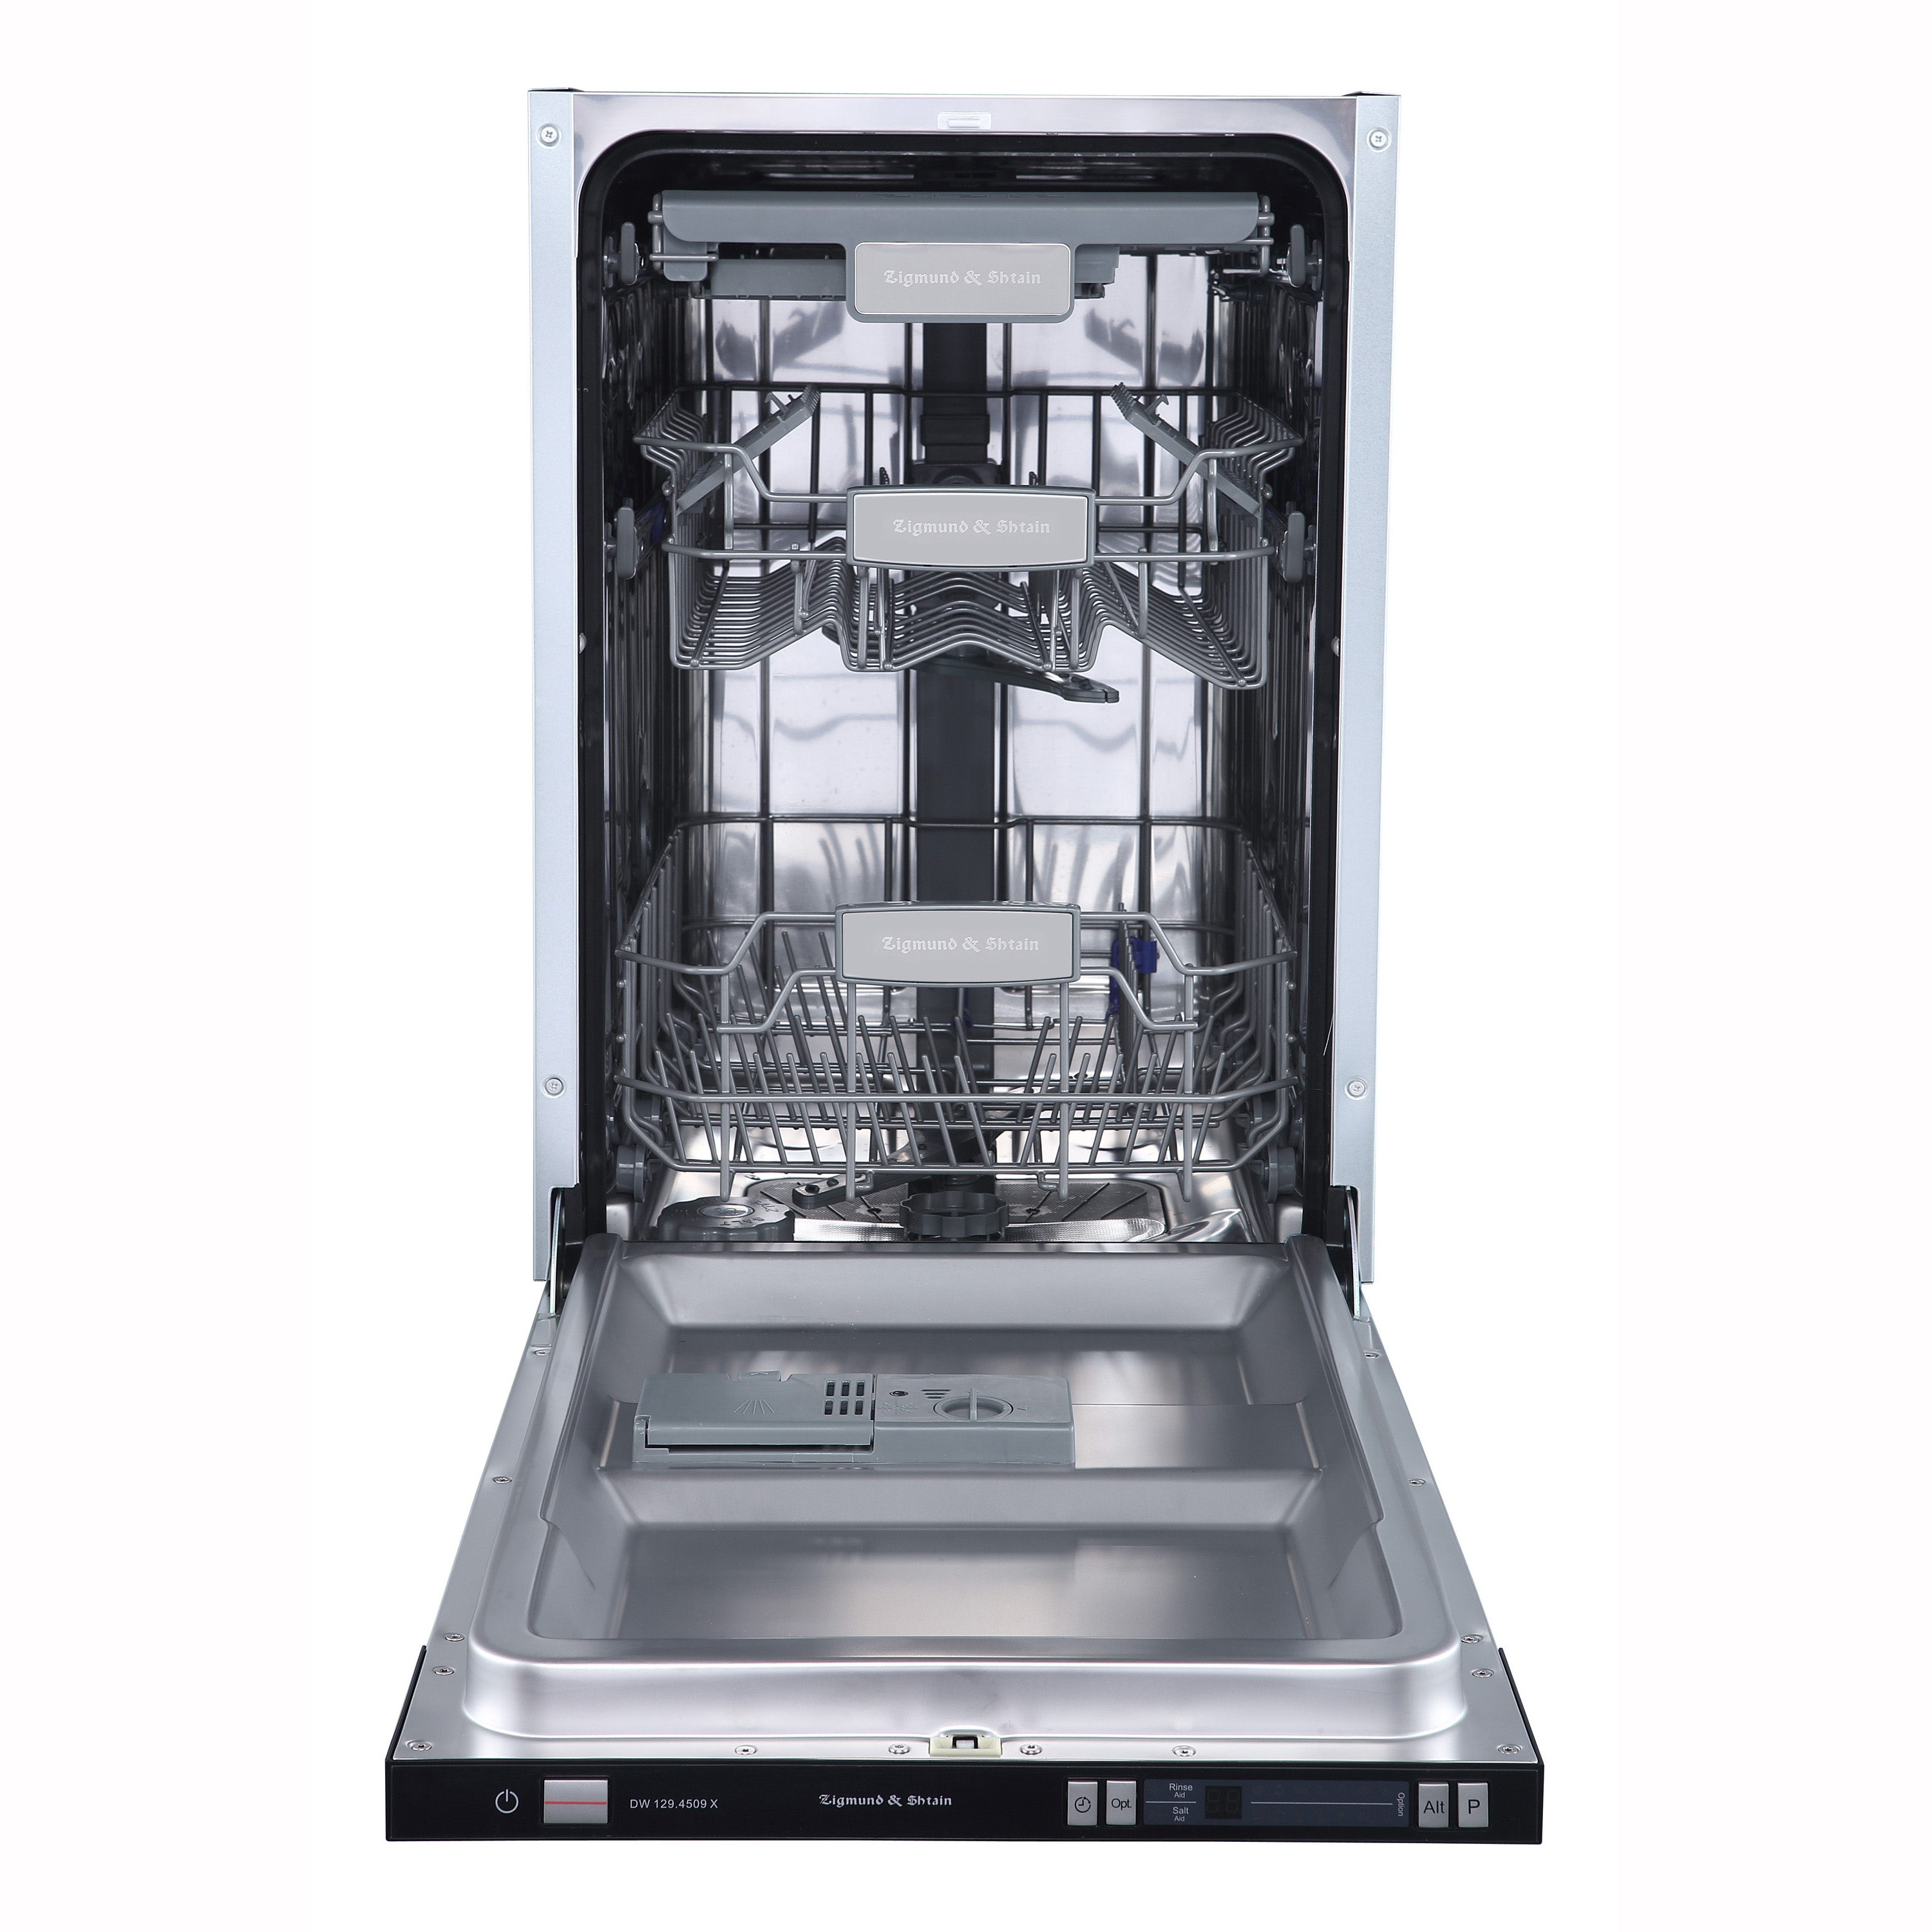 Встраиваемая посудомоечная машина Zigmund & Shtain DW 129.4509 X встраиваемая посудомоечная машина haier dw10 198bt3ru